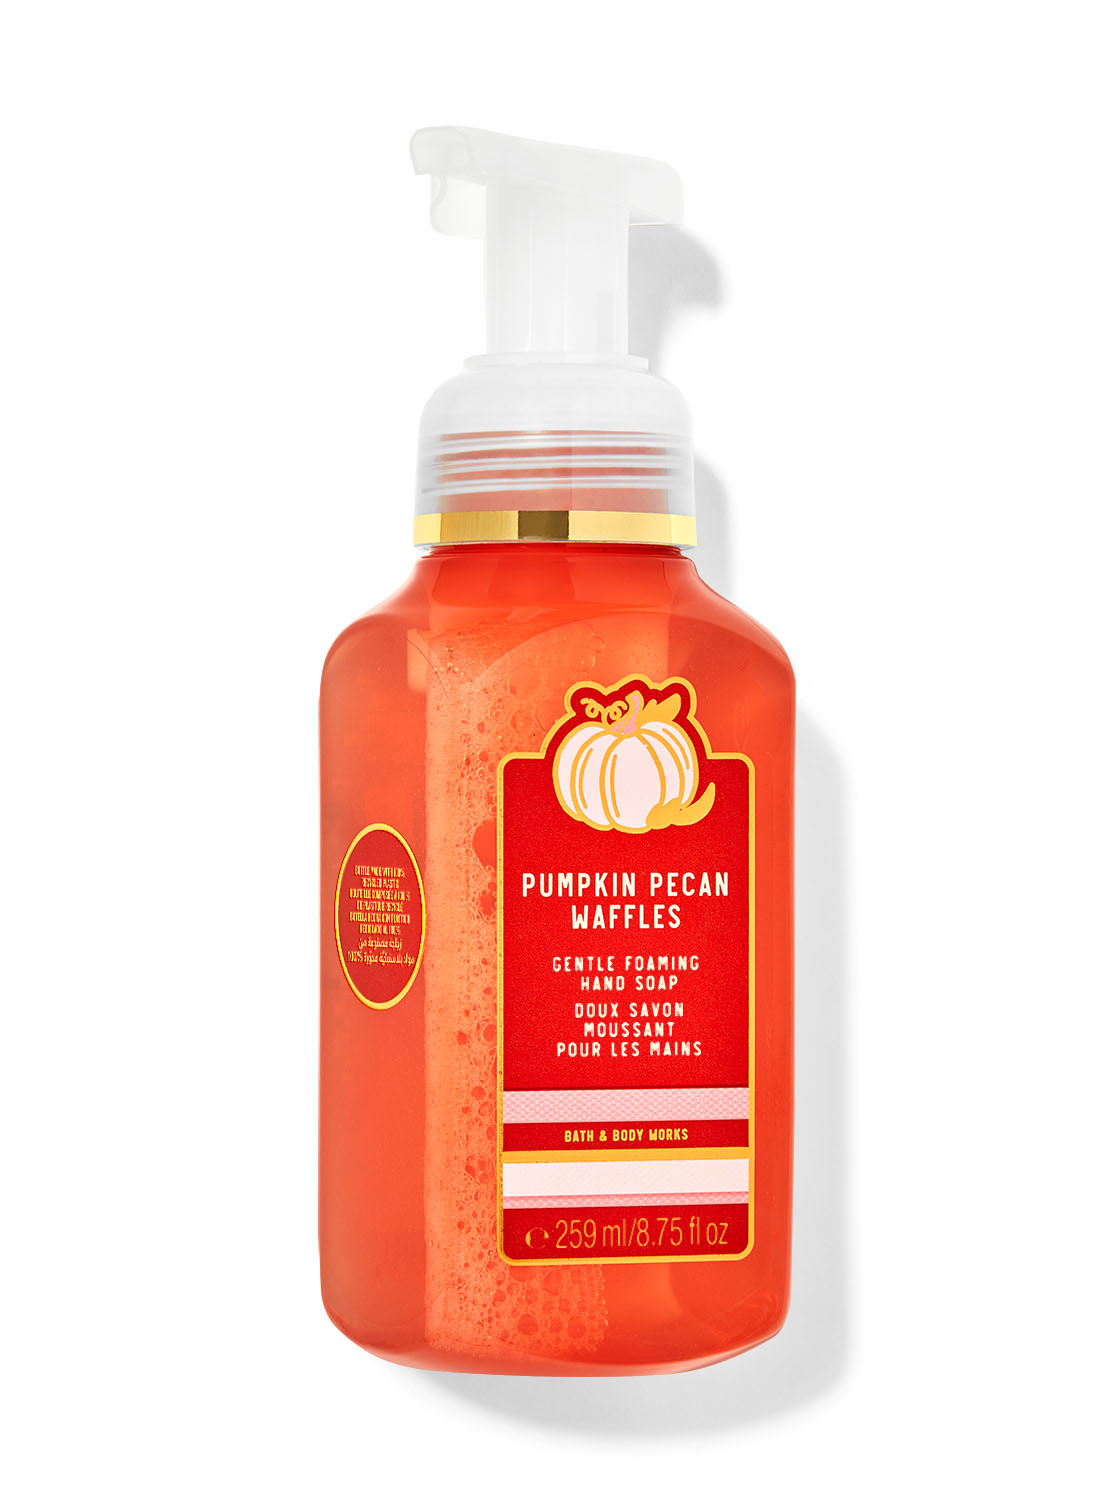 Pumpkin Pecan Waffles Gentle Foaming Hand Soap | Bath and Body Works